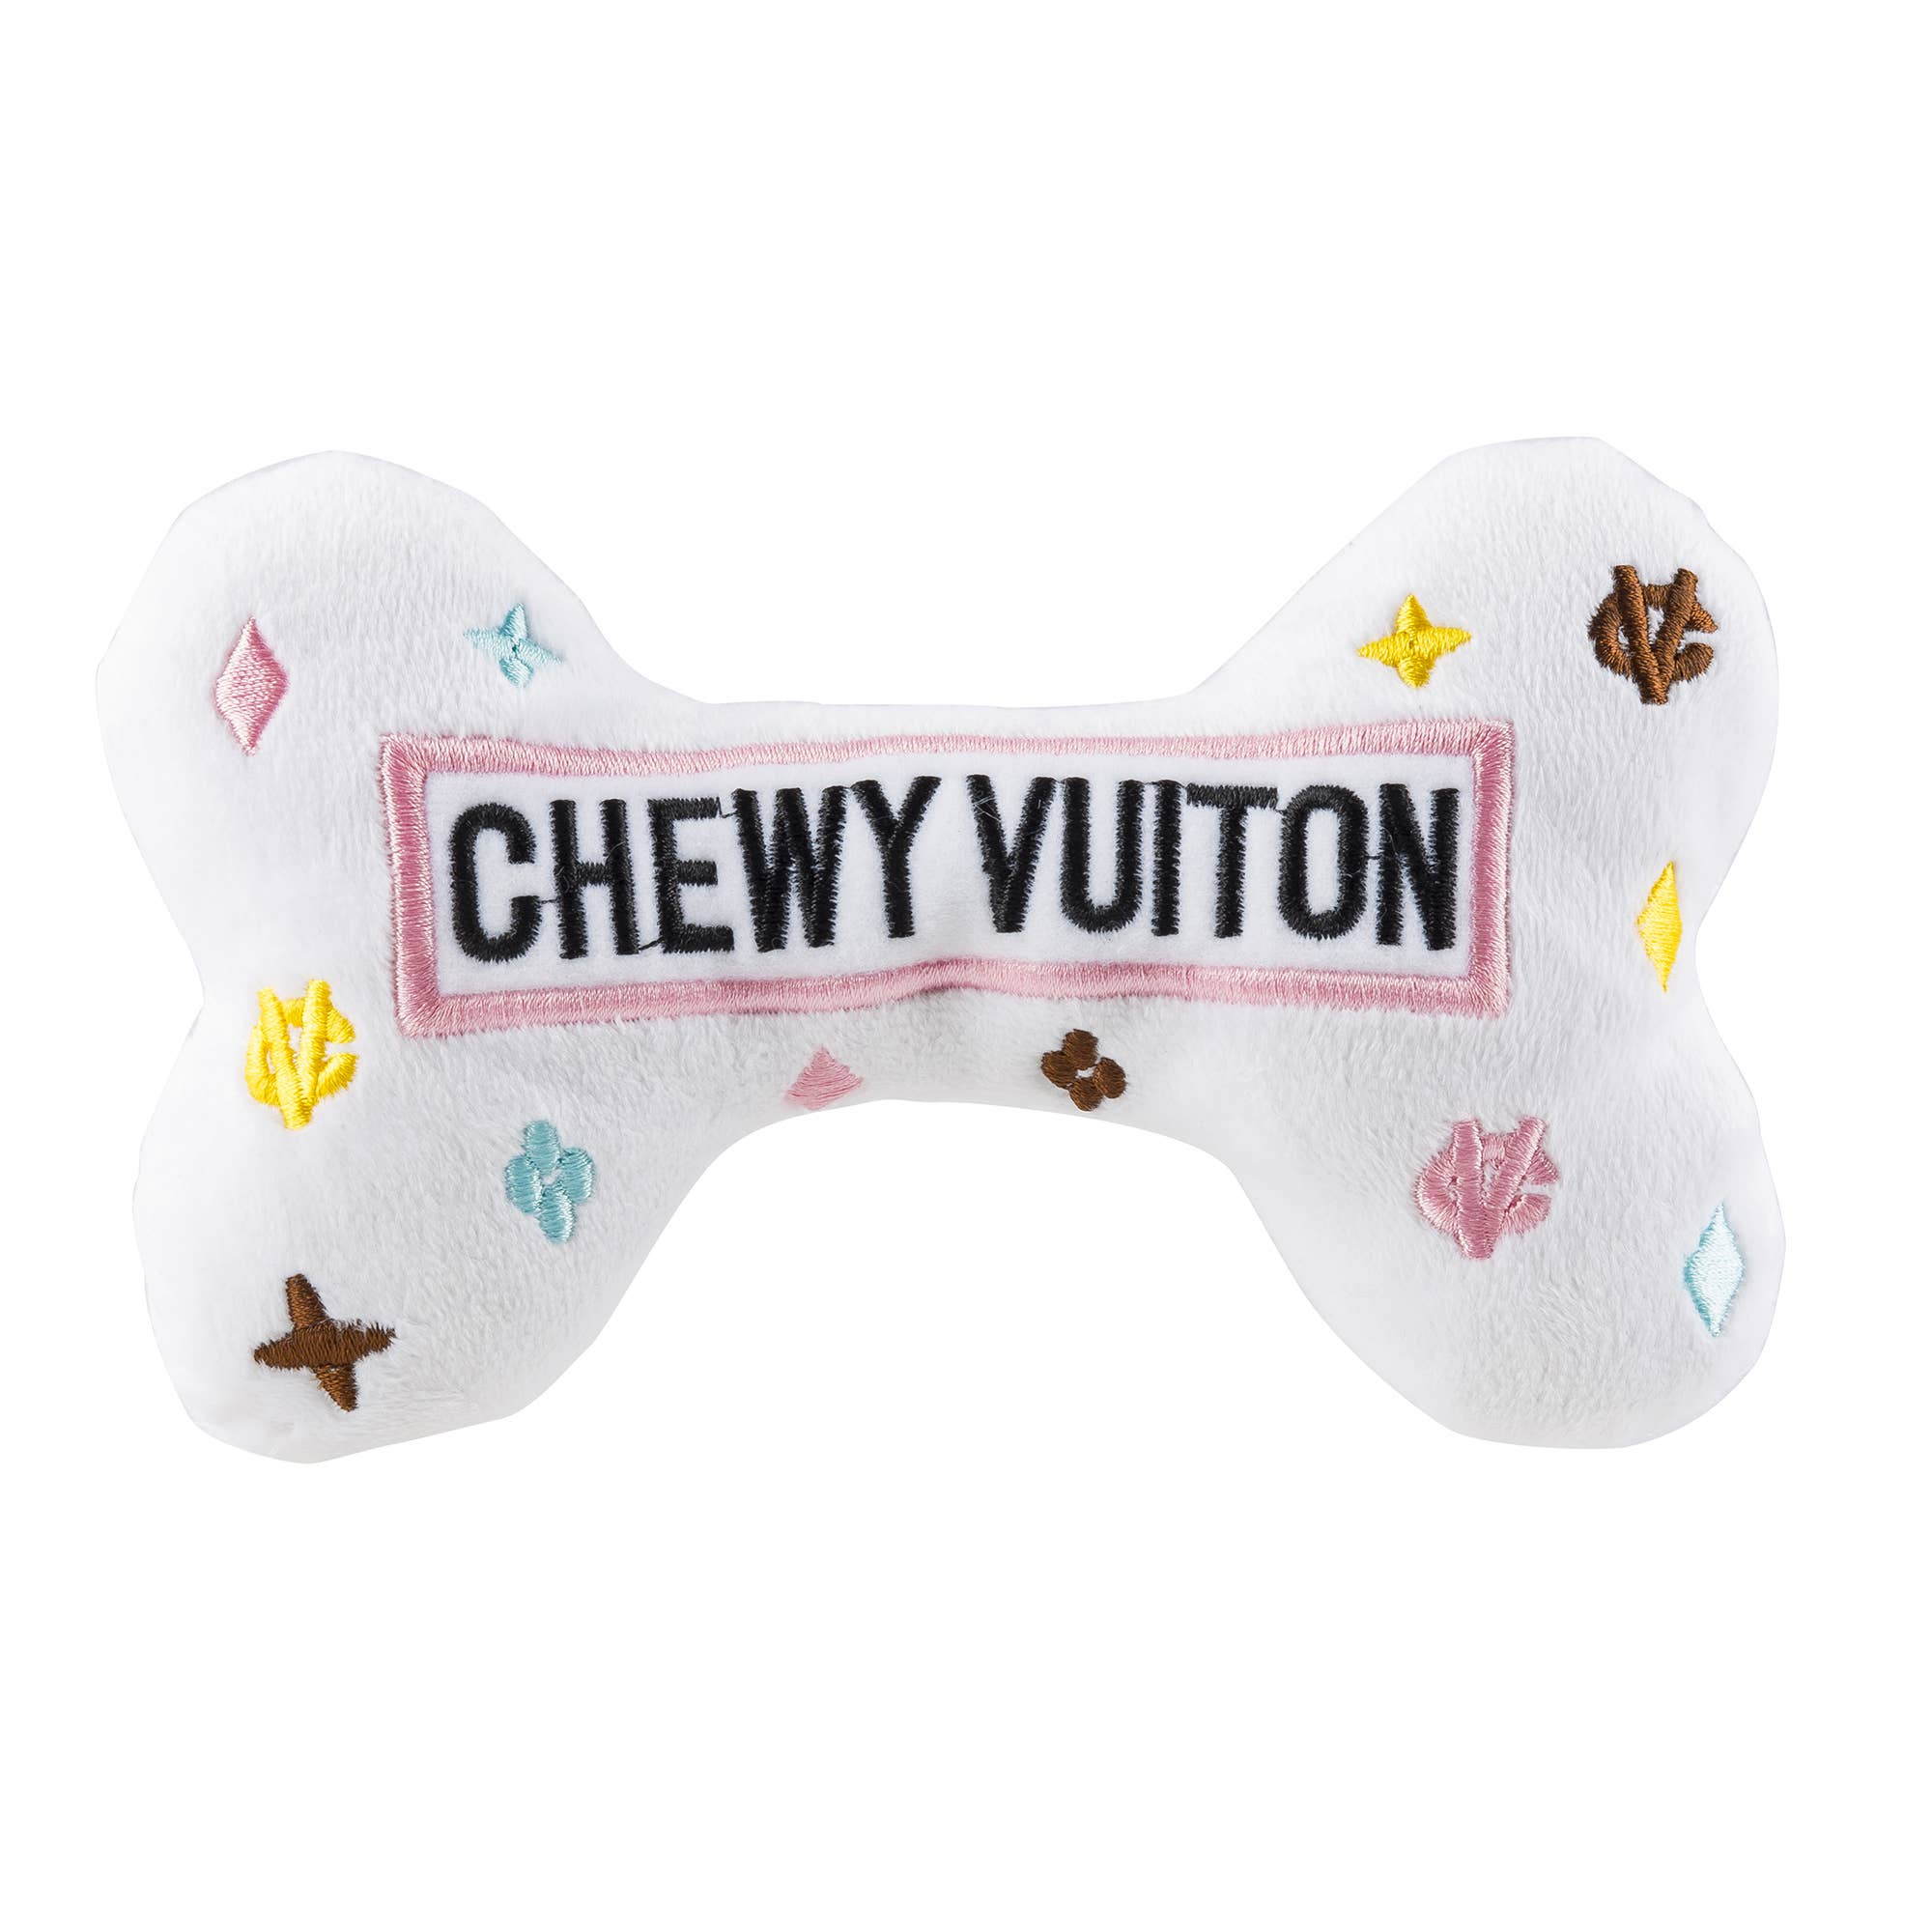 Chewy Vuiton Knochenspielzeug in Weiß